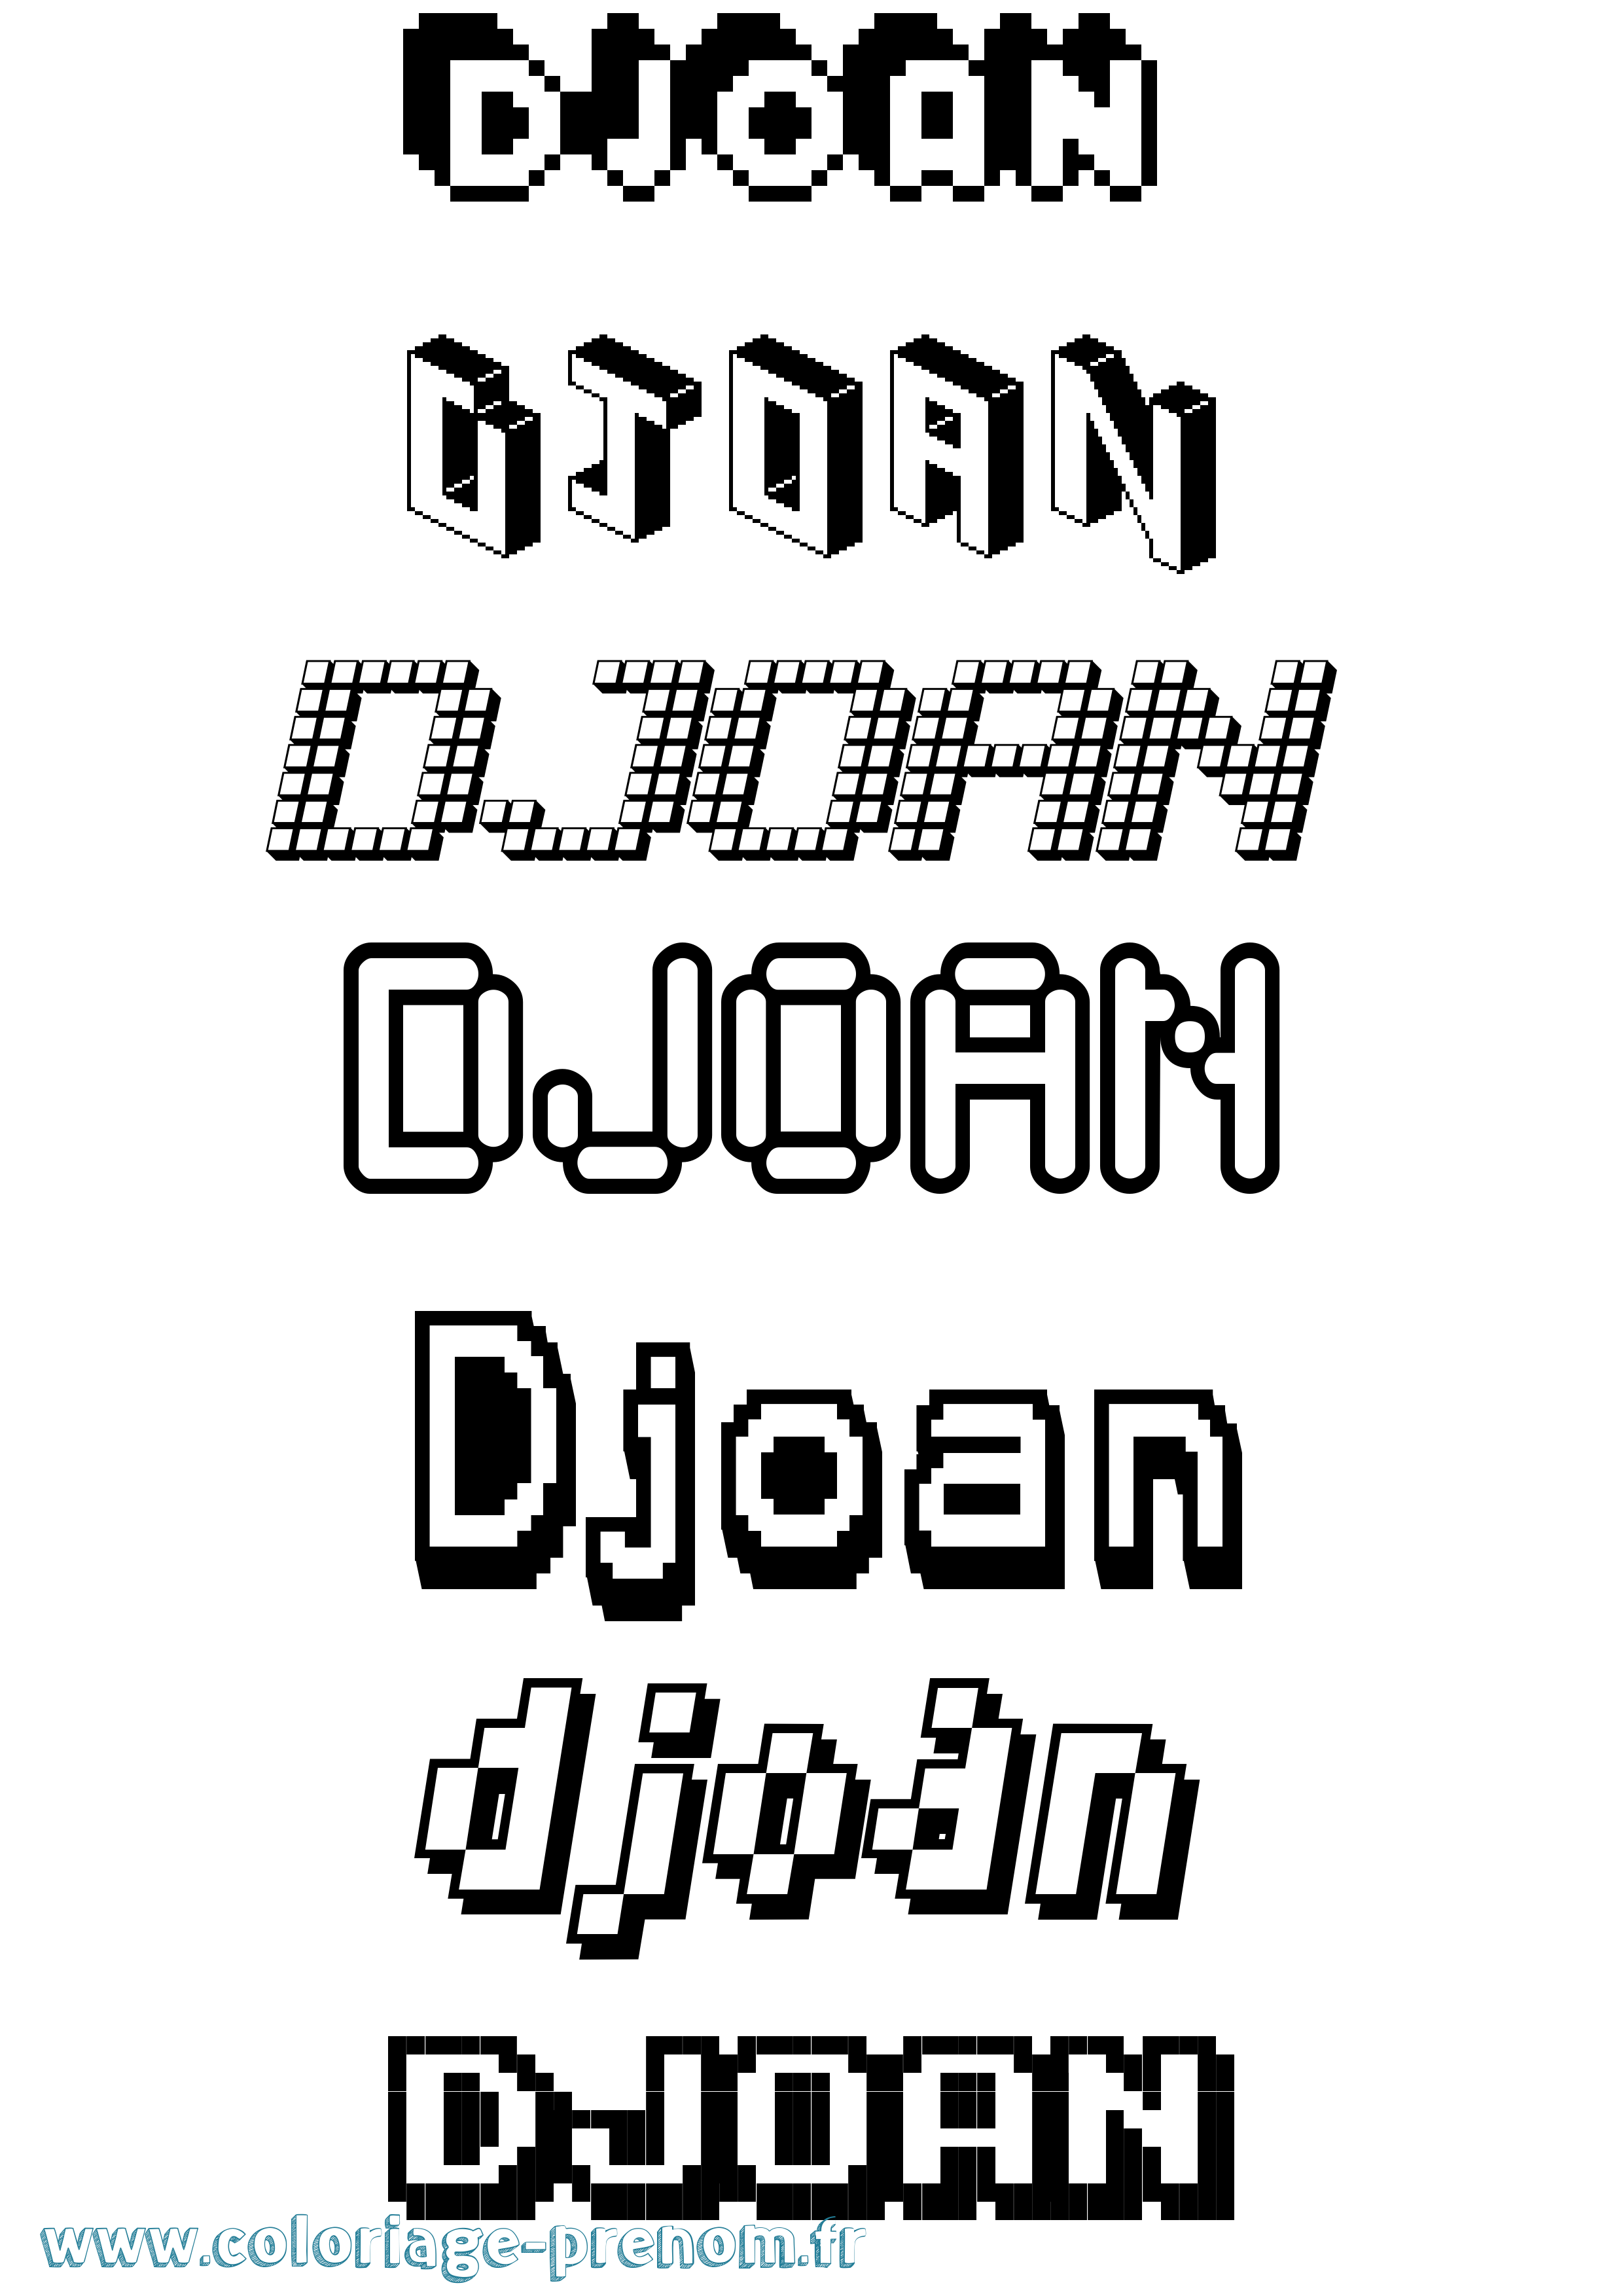 Coloriage prénom Djoan Pixel